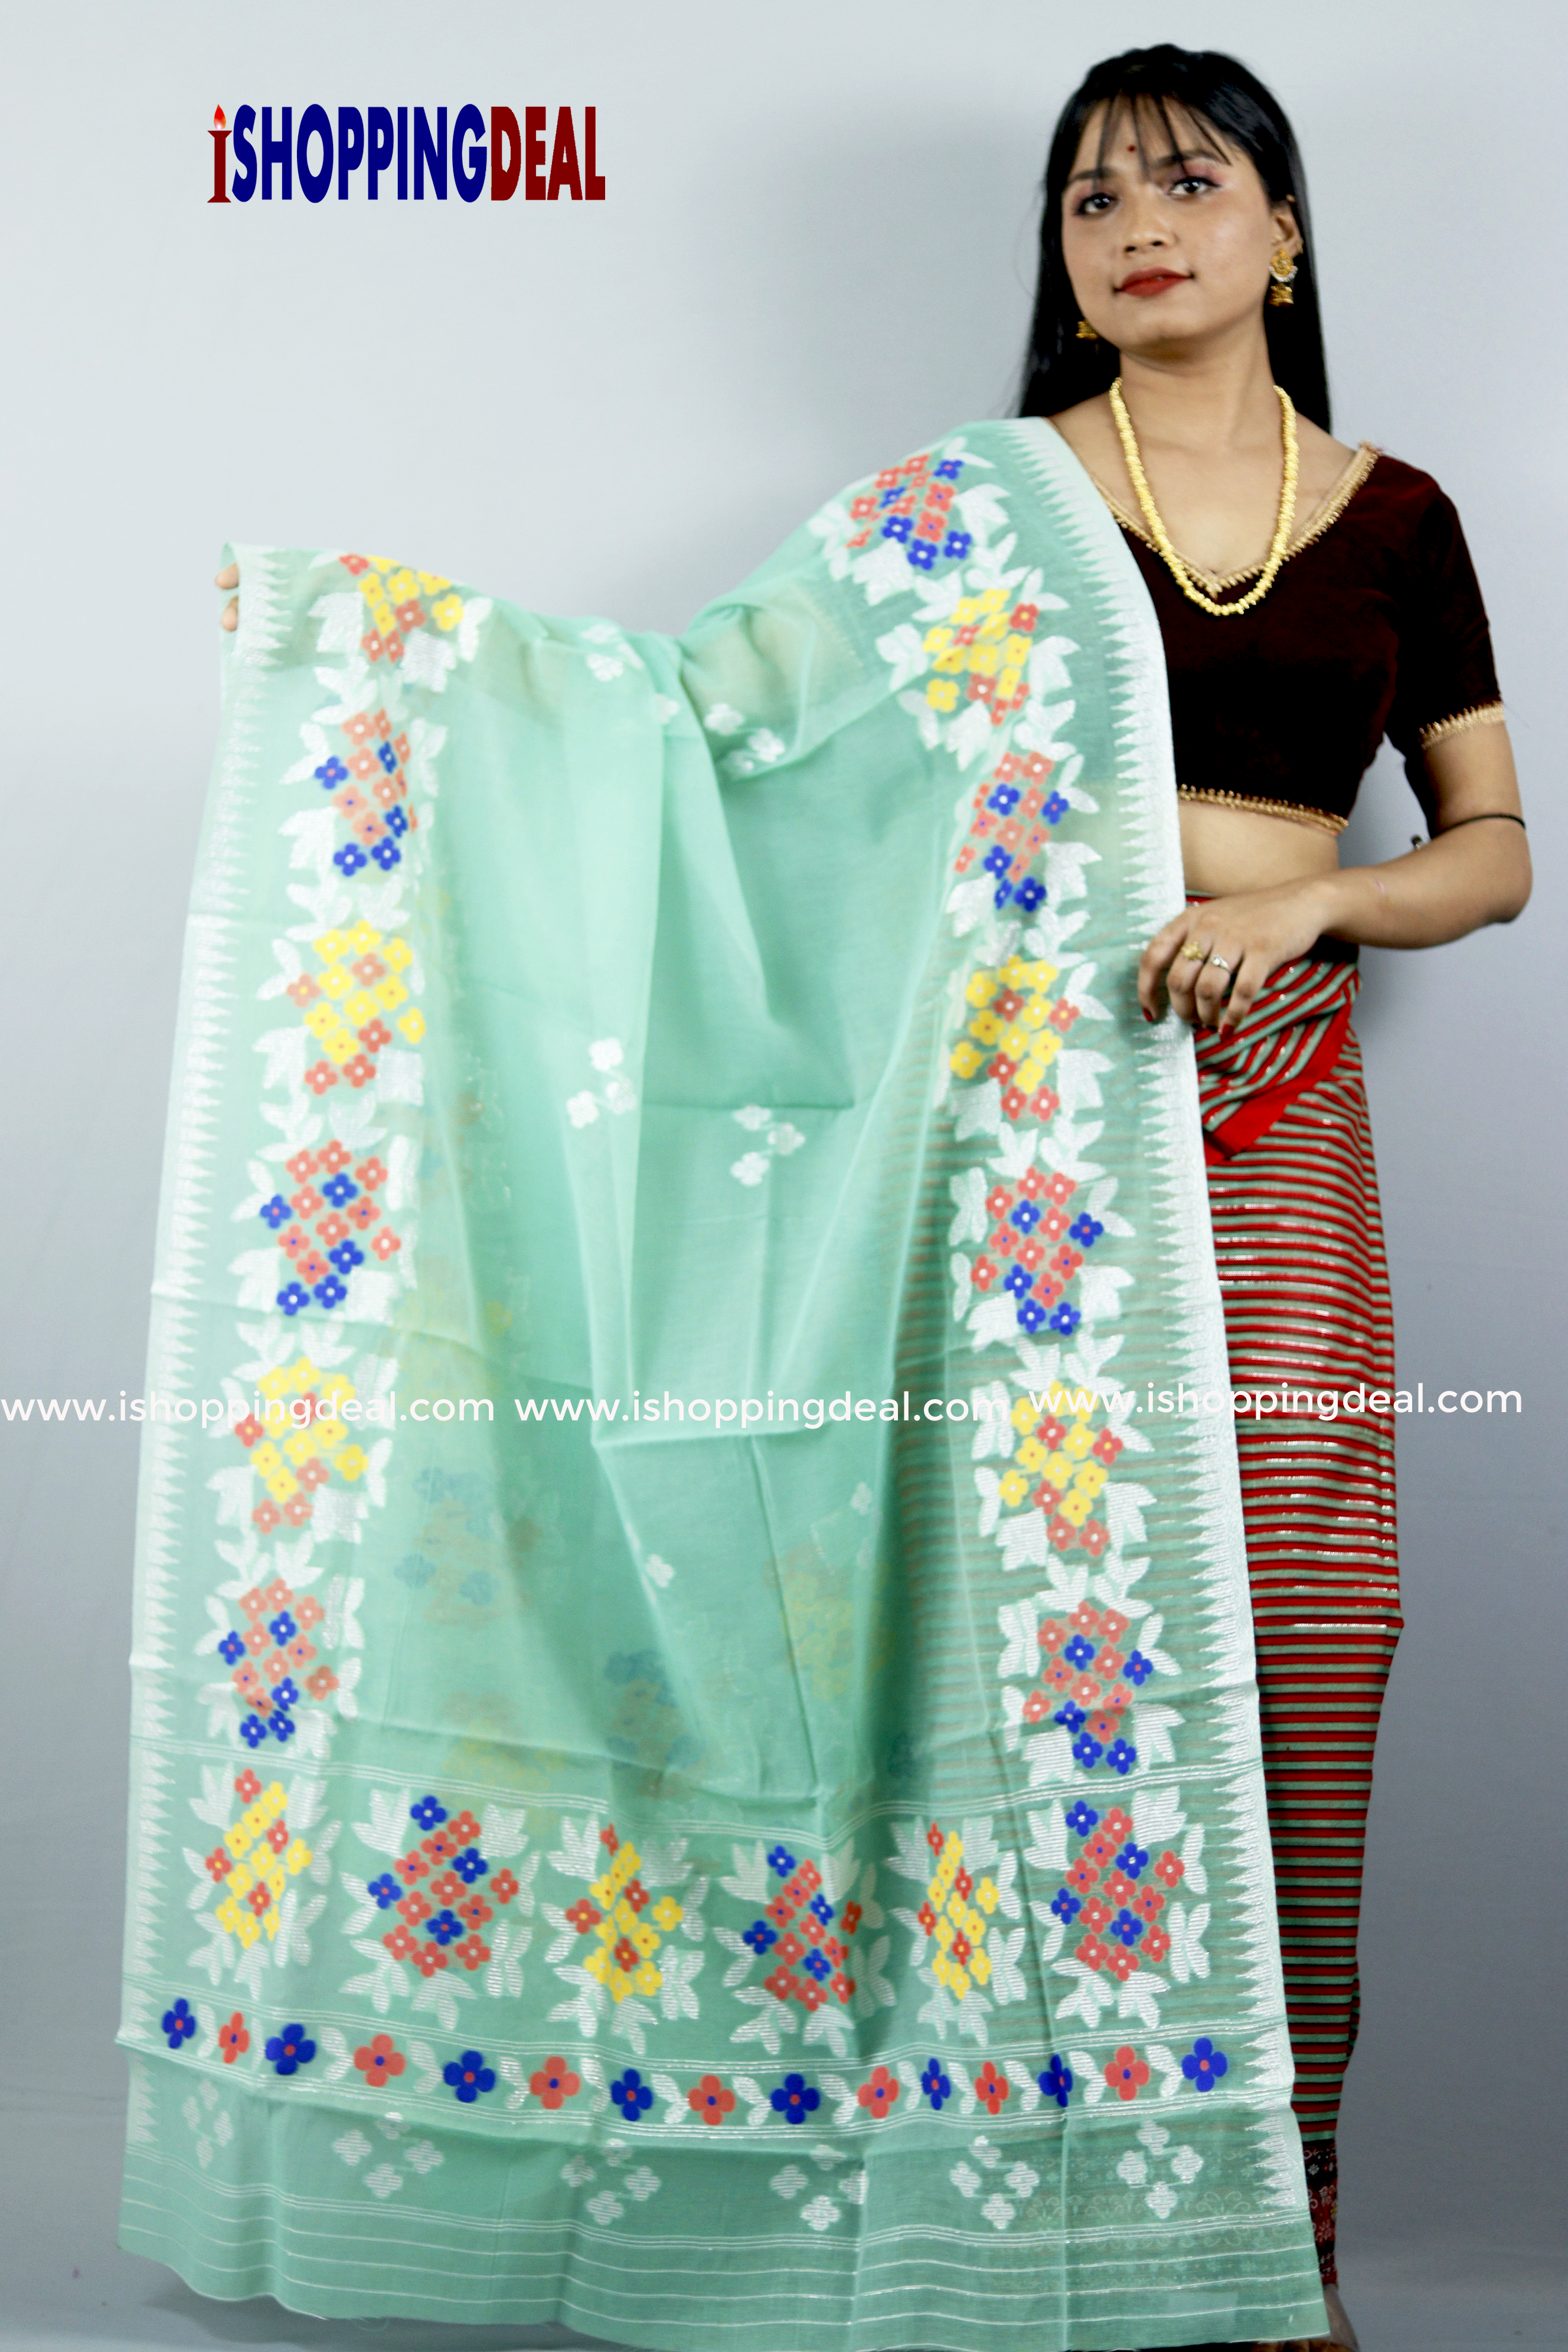 manipuri dress